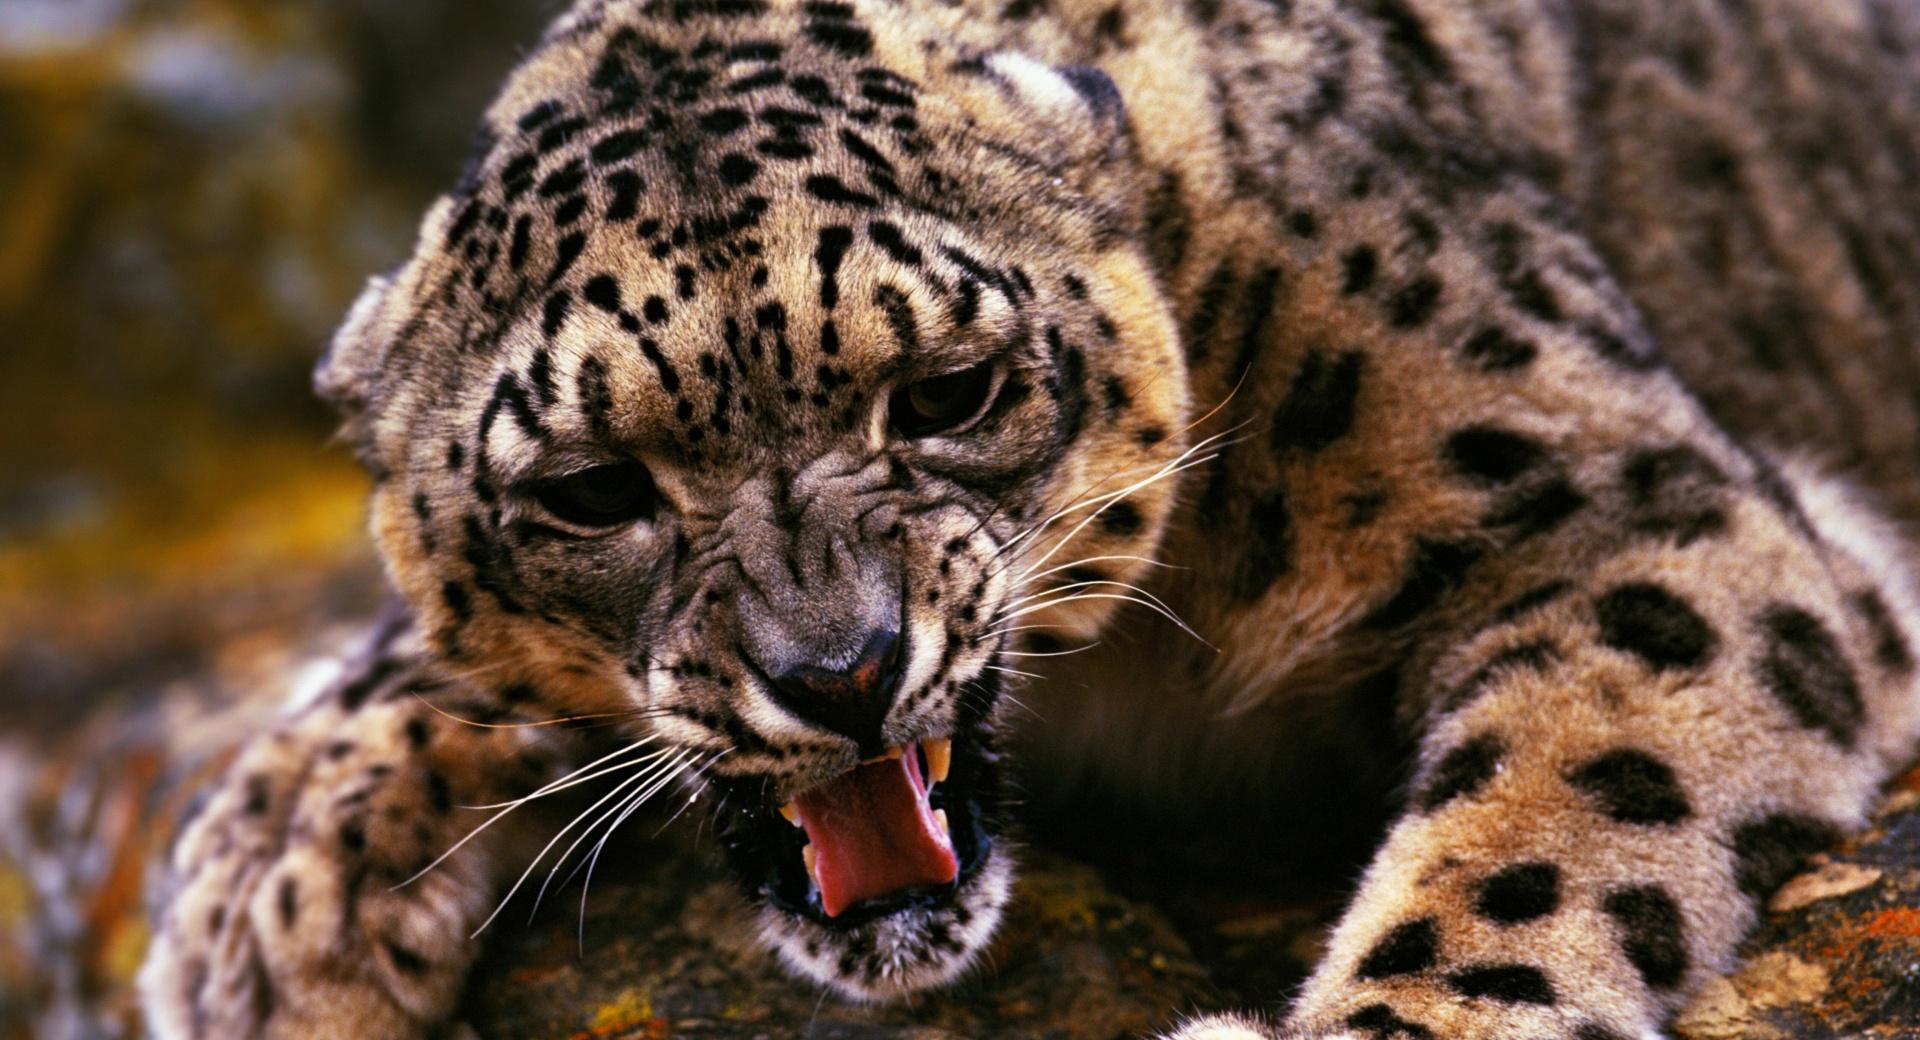 Angry Cheetah wallpapers HD quality